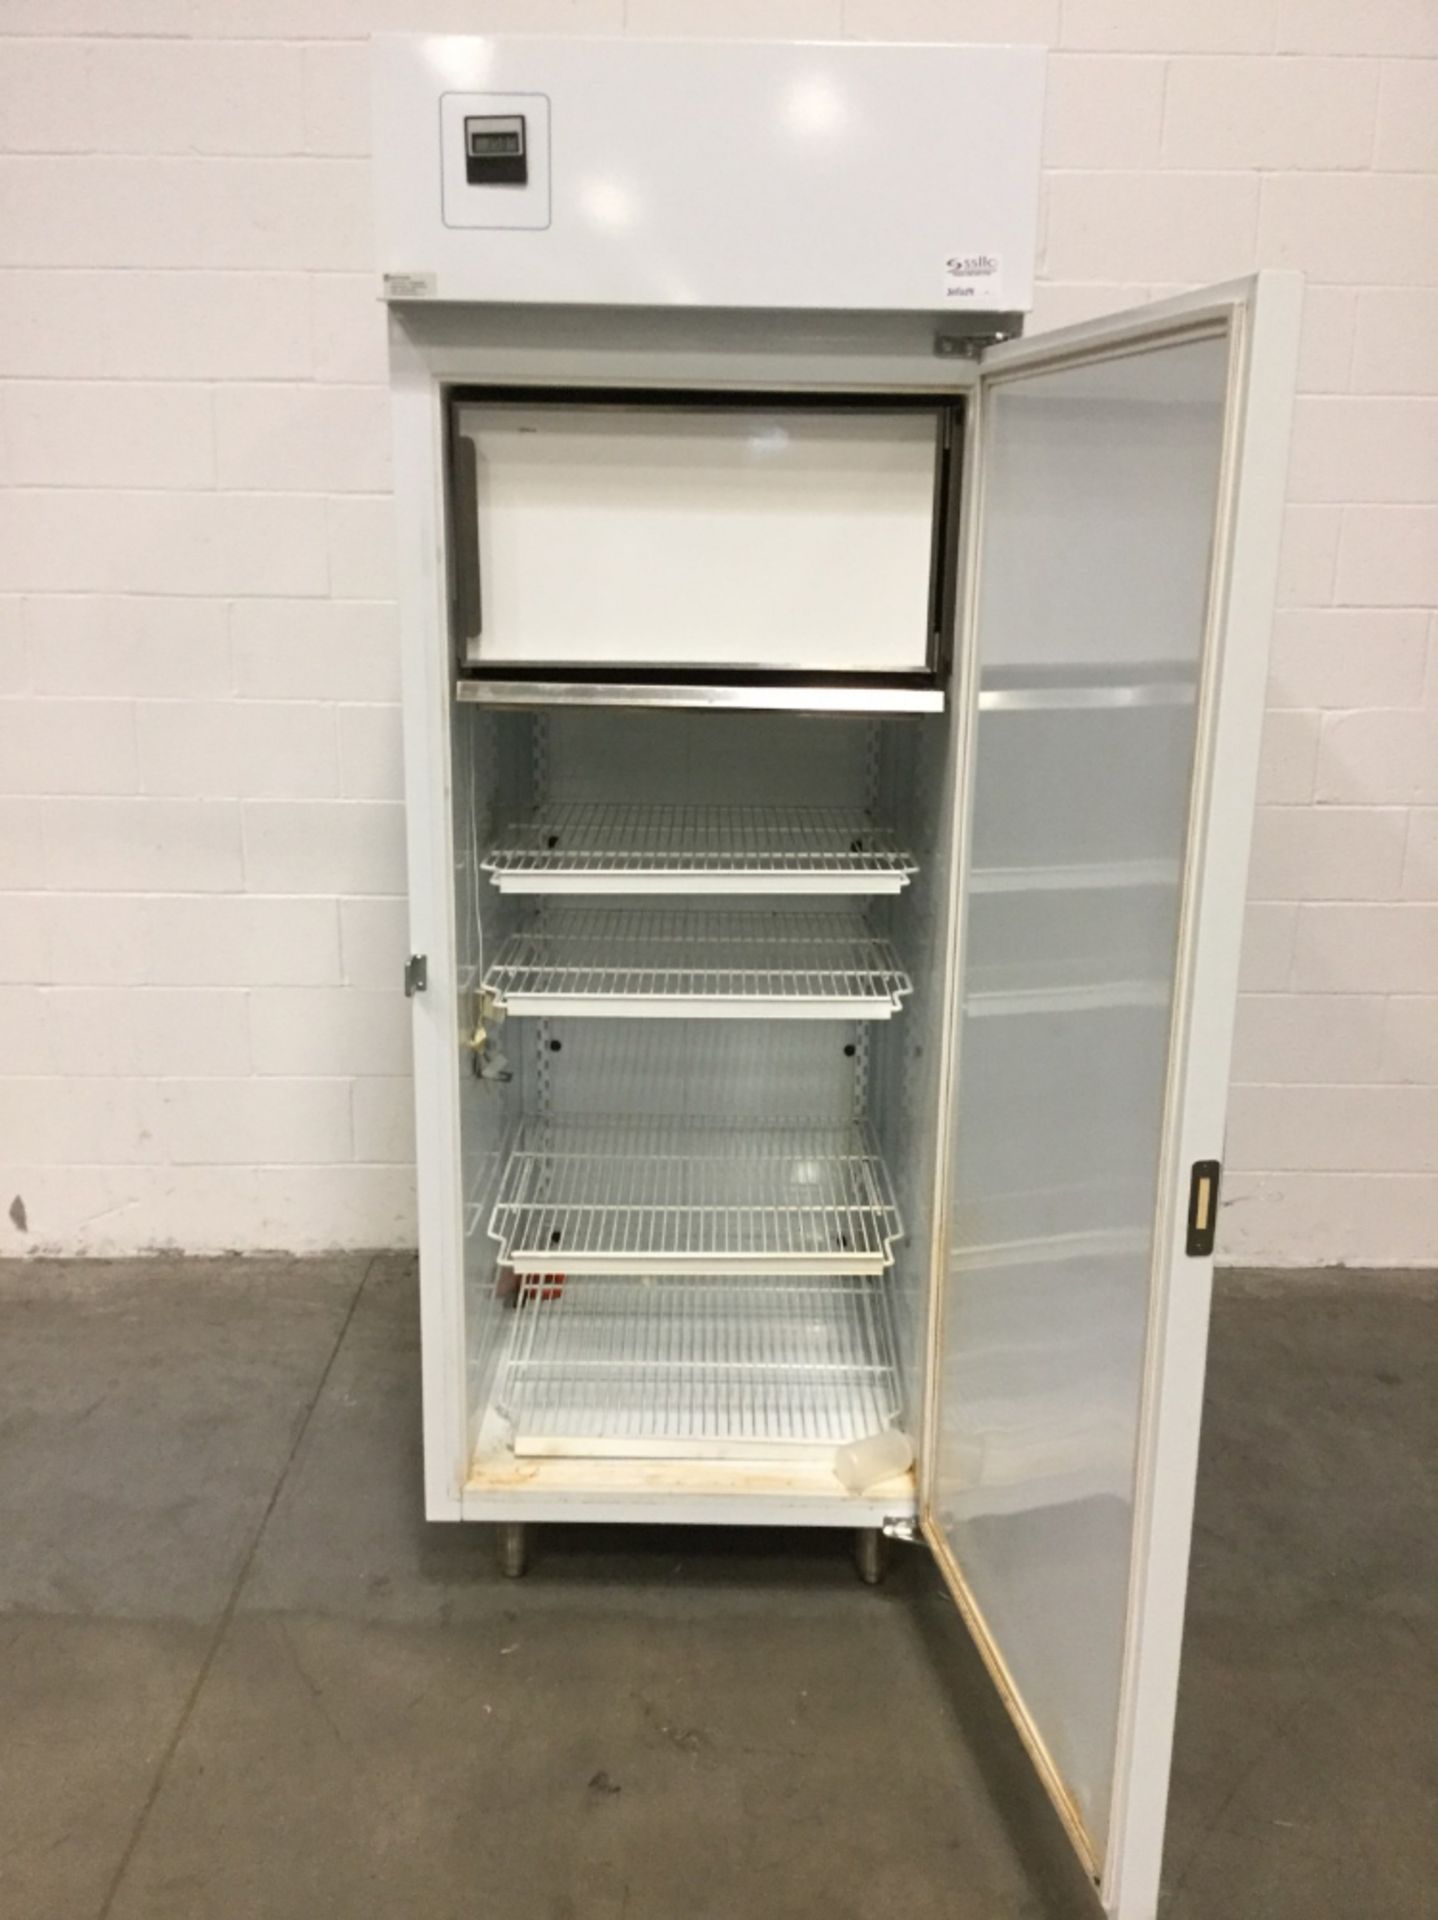 Fisher Scientific Isotemp Laboratory Refrigerator/Freezer - Image 2 of 3